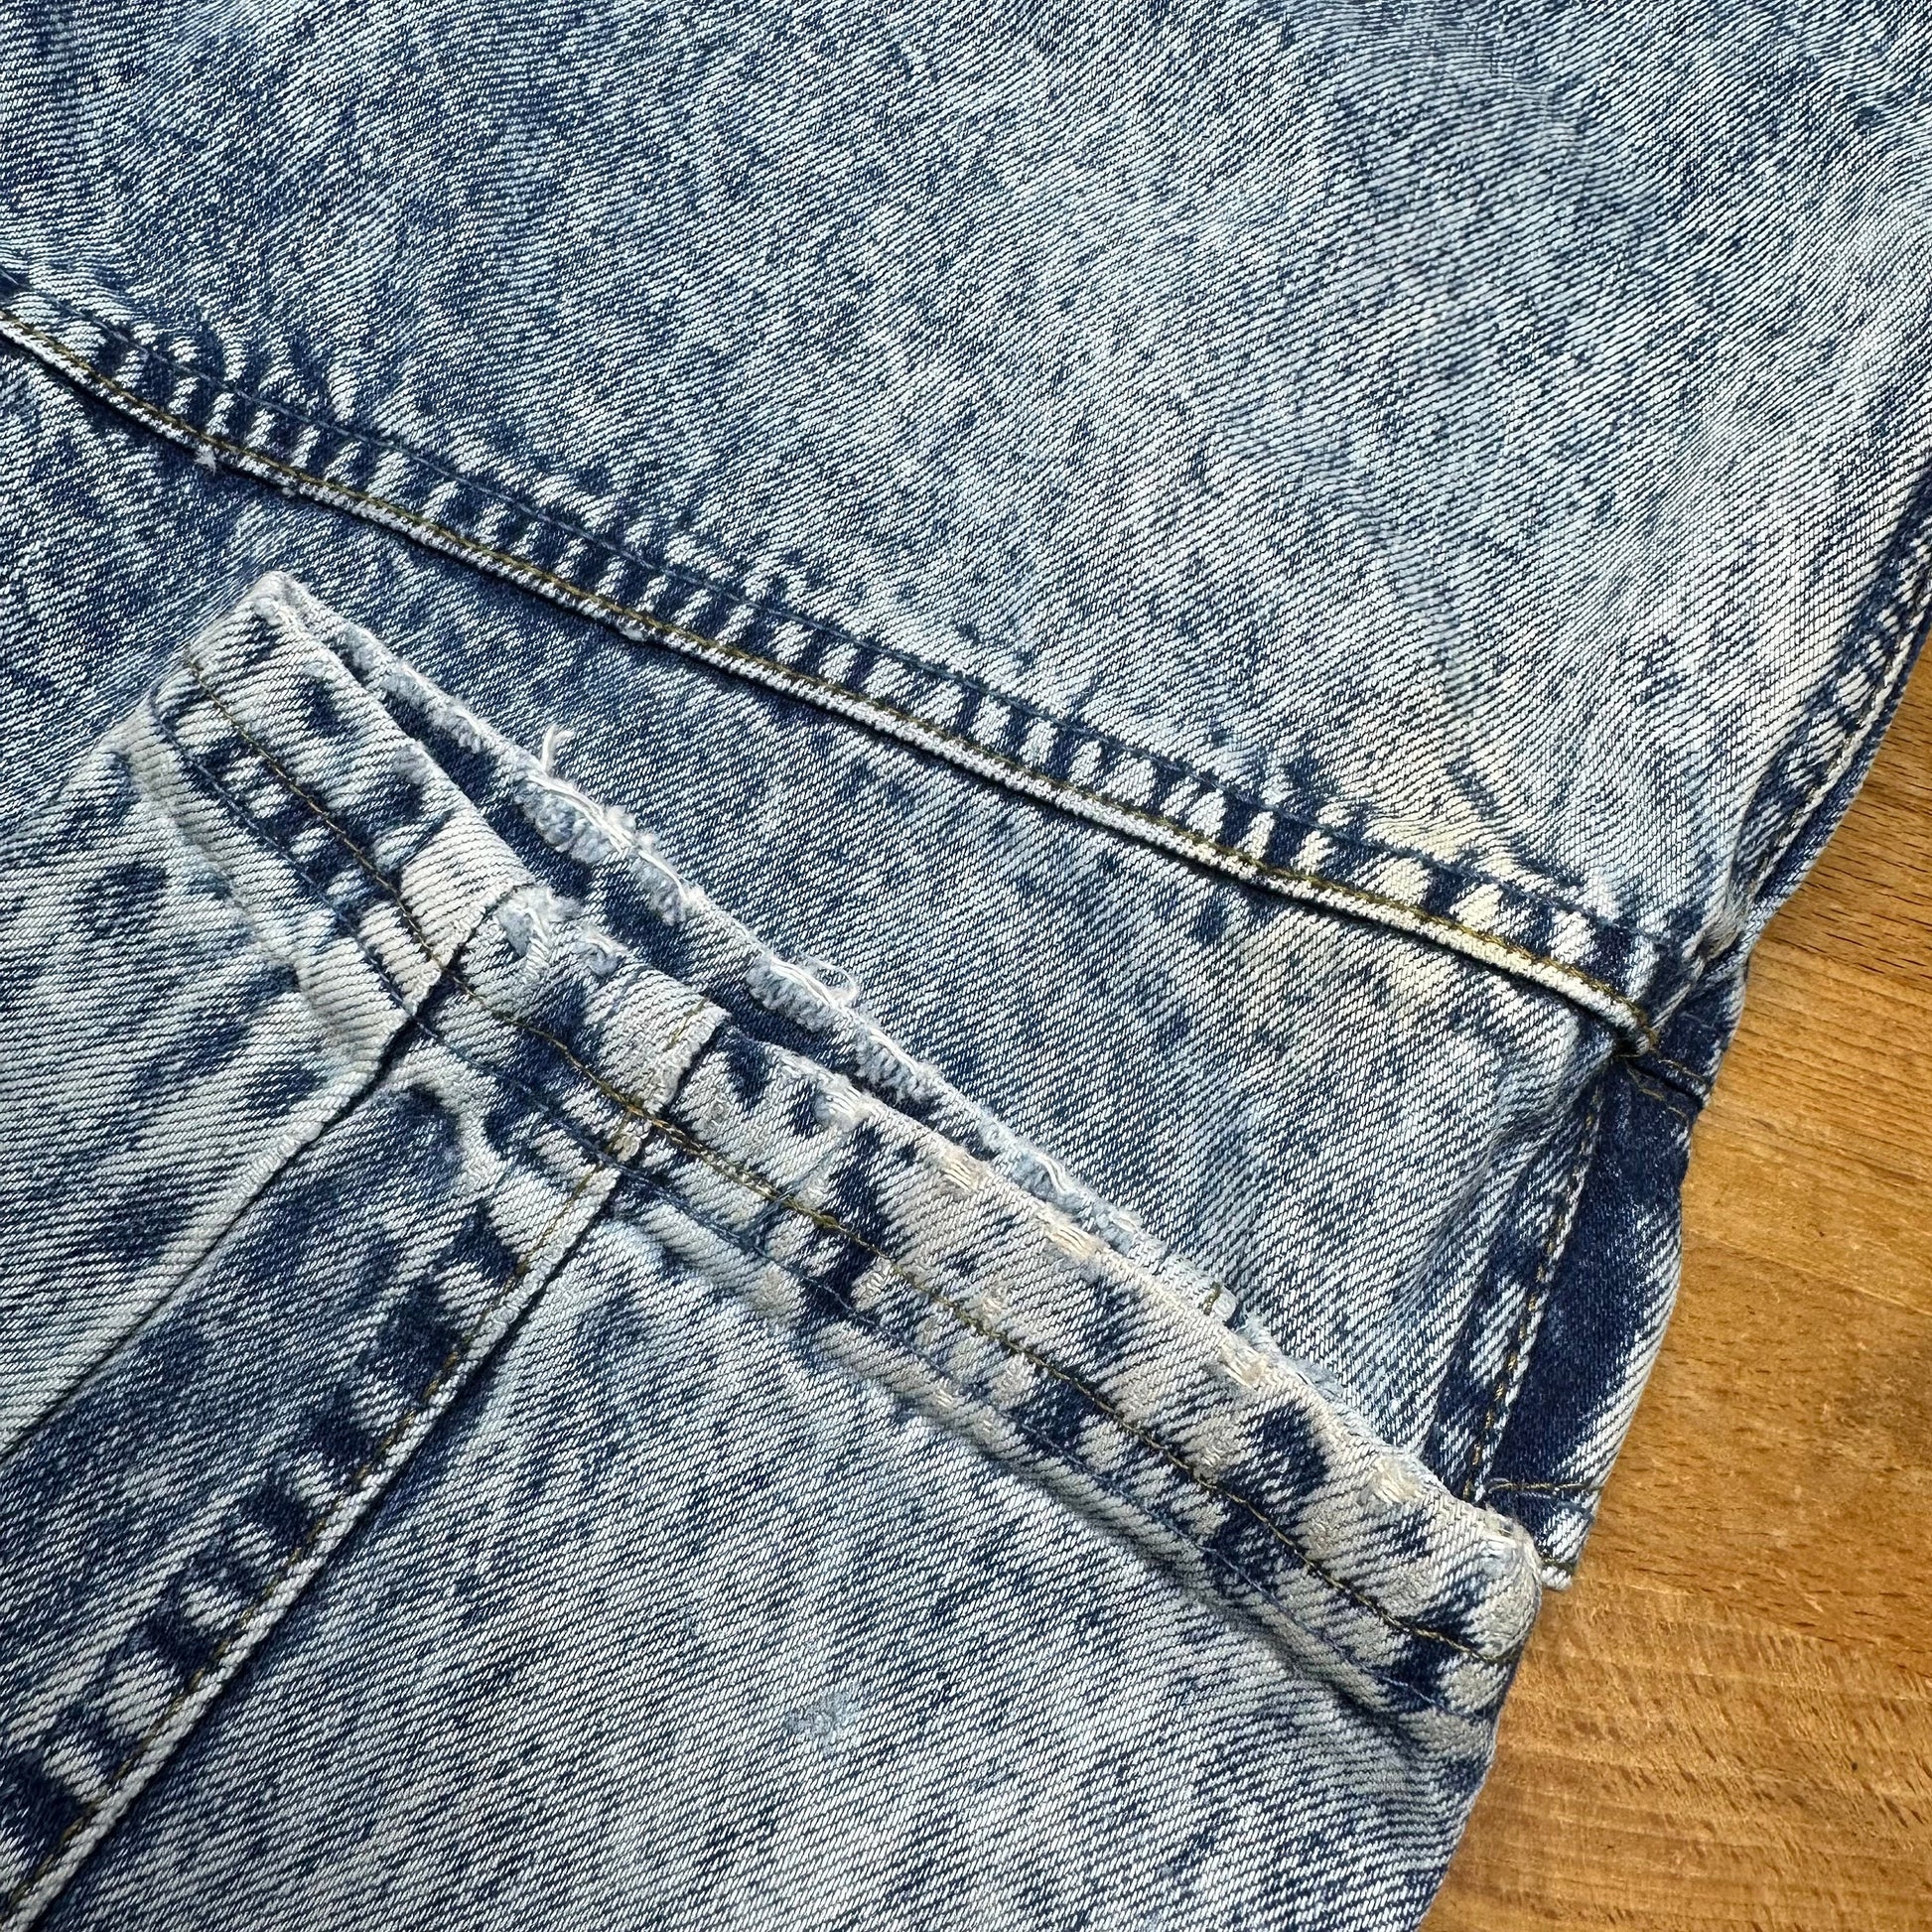 80s Acid Wash Denim Cargo Jeans - Medium, 29" | Vintage Bugle Boy Grunge Tapered High Waisted Mom Jeans